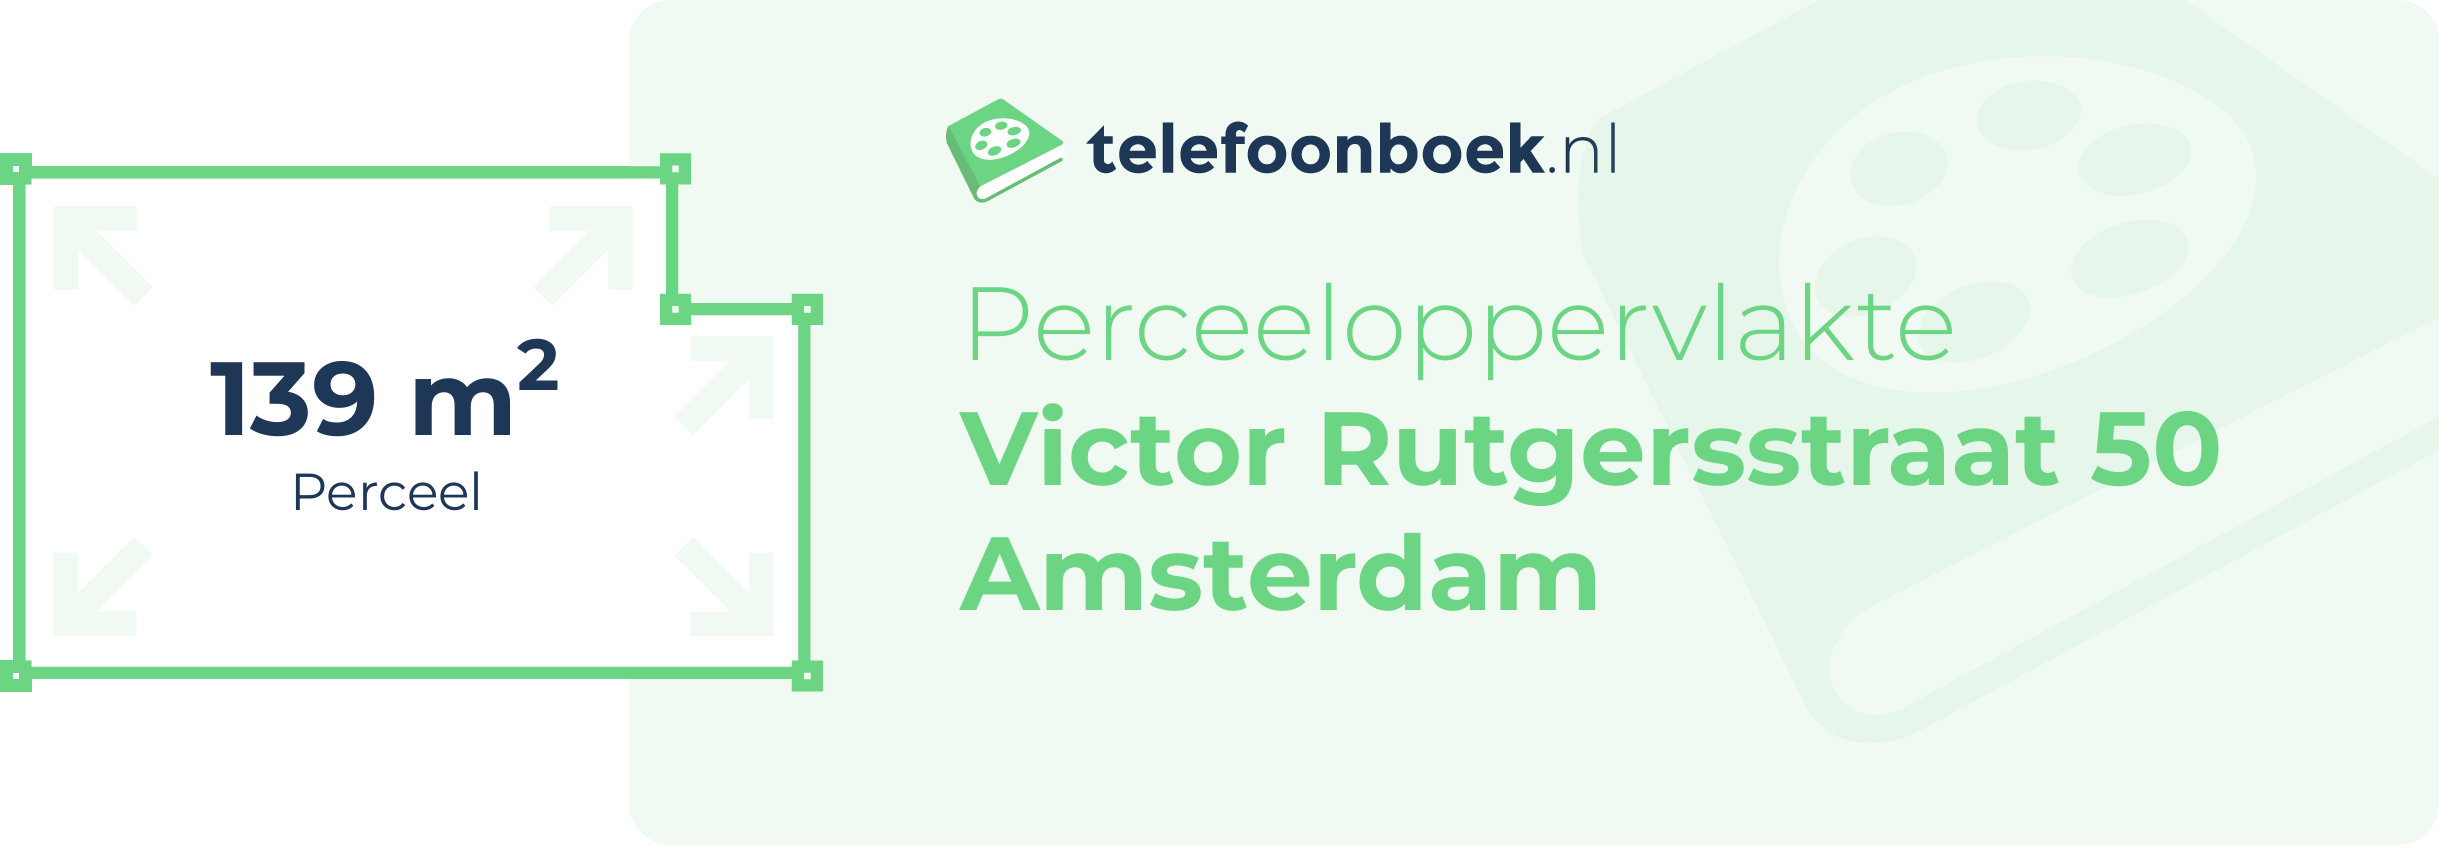 Perceeloppervlakte Victor Rutgersstraat 50 Amsterdam